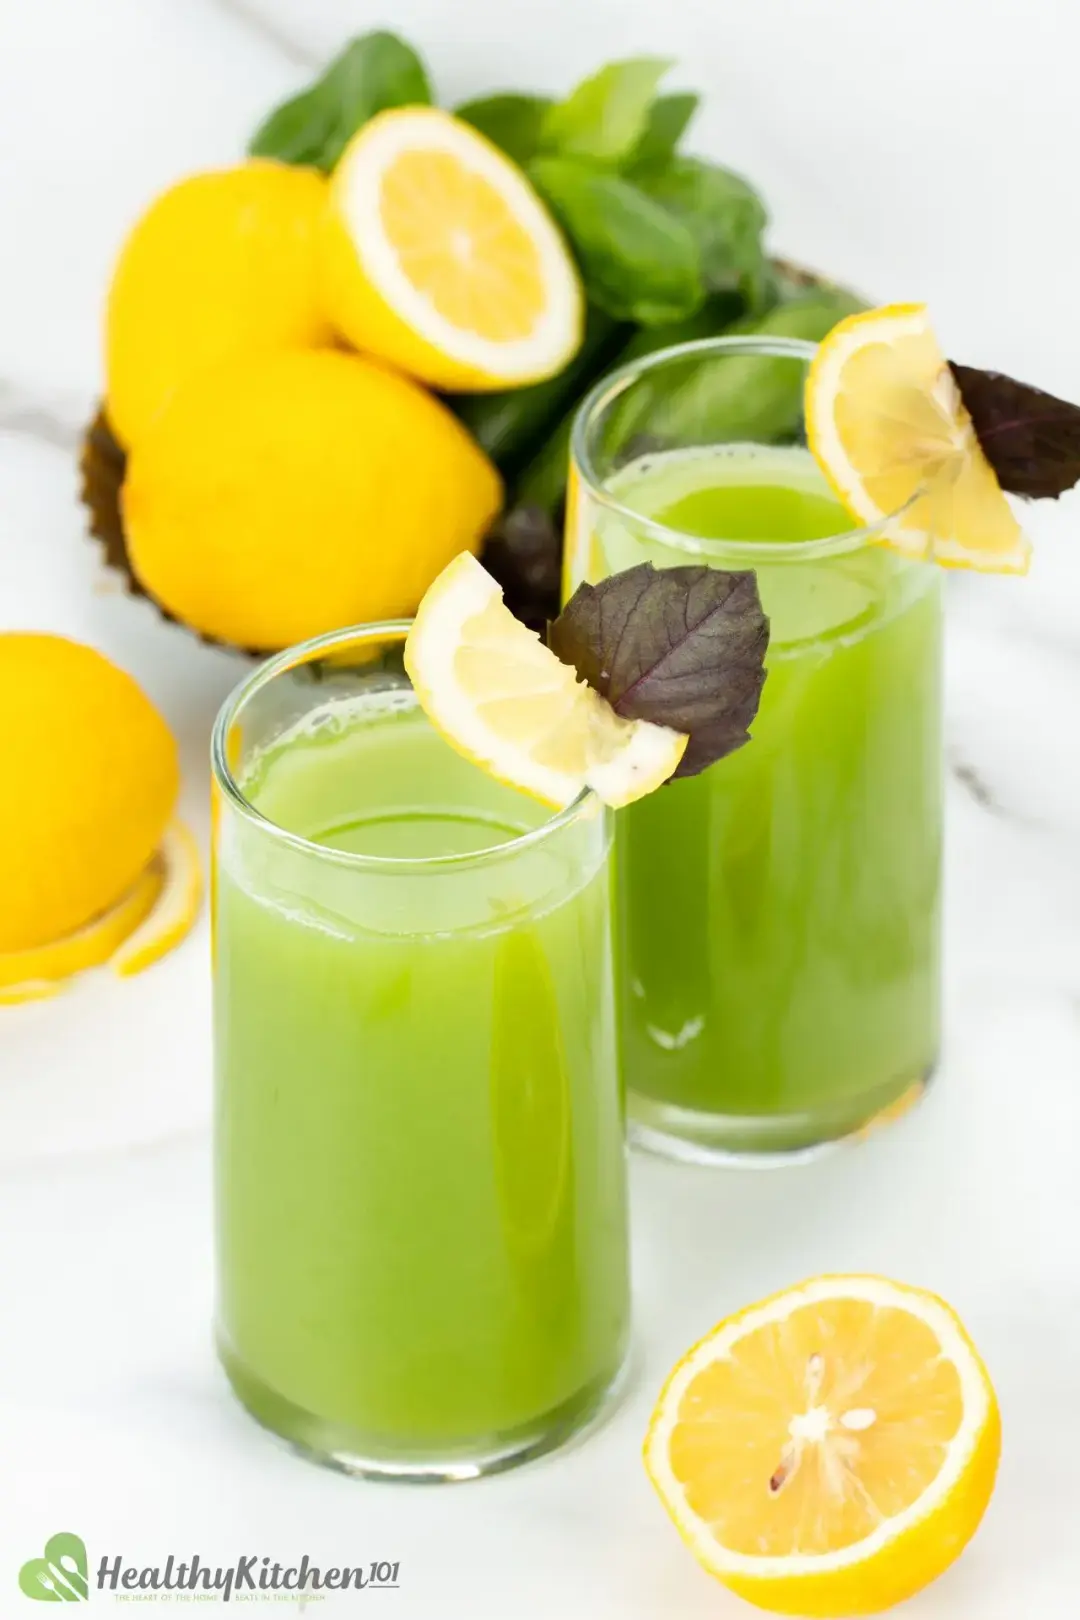 Does Cucumber and Lemon Juice Have Detoxification Property